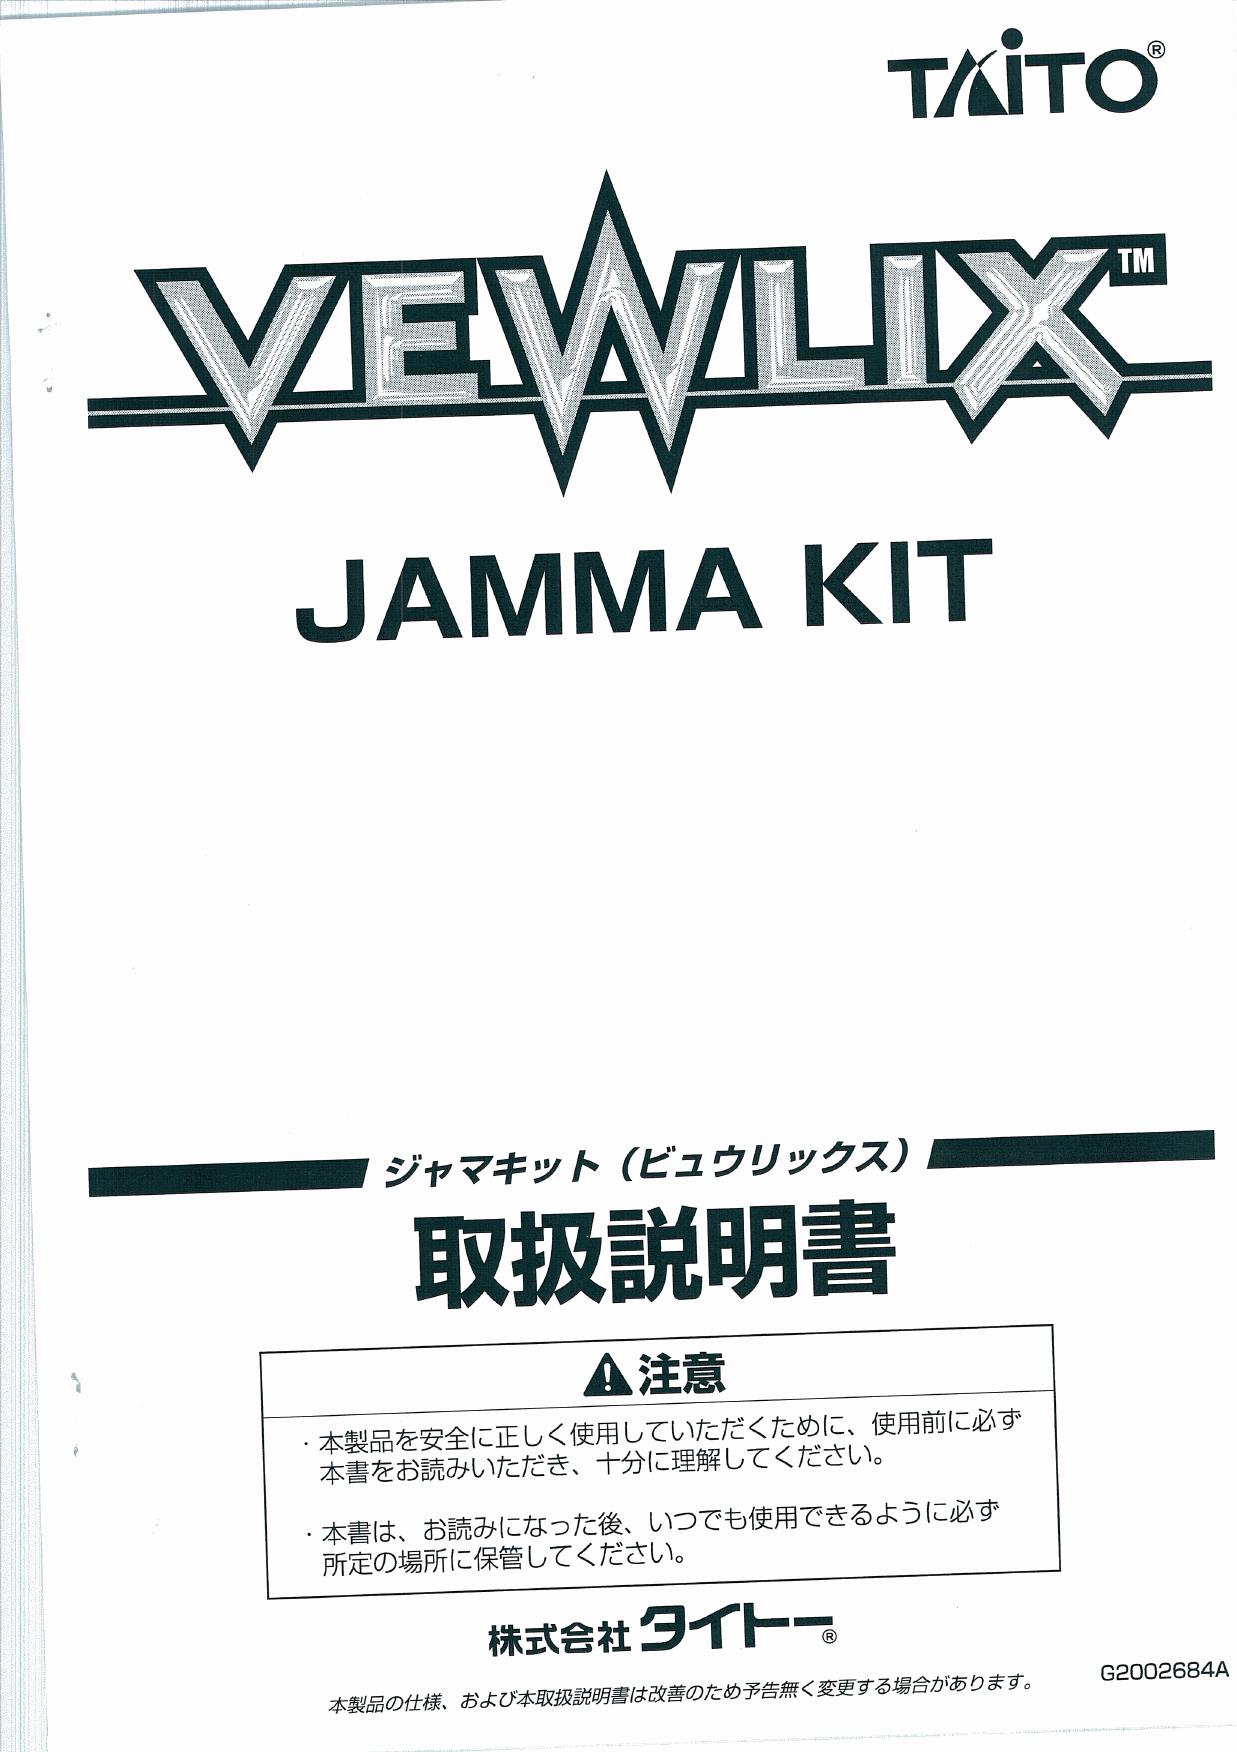 Vewlix Jamma kit